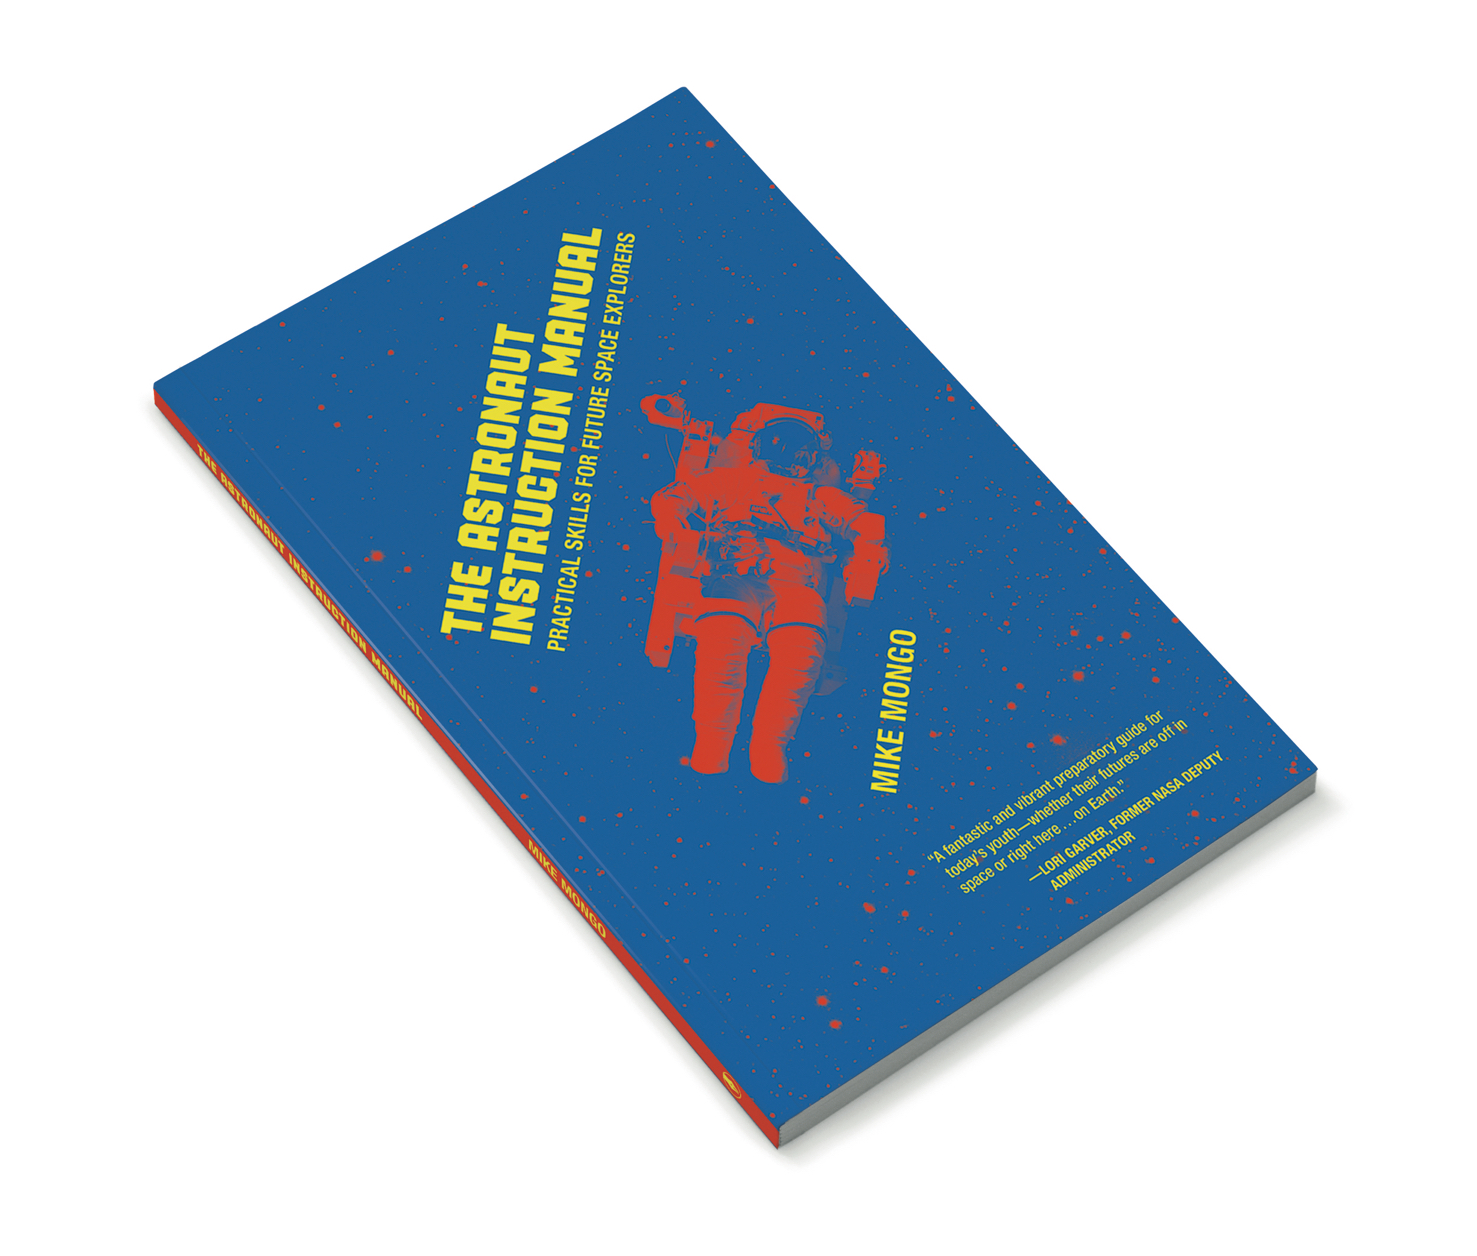 The Astronaut Instruction Manual